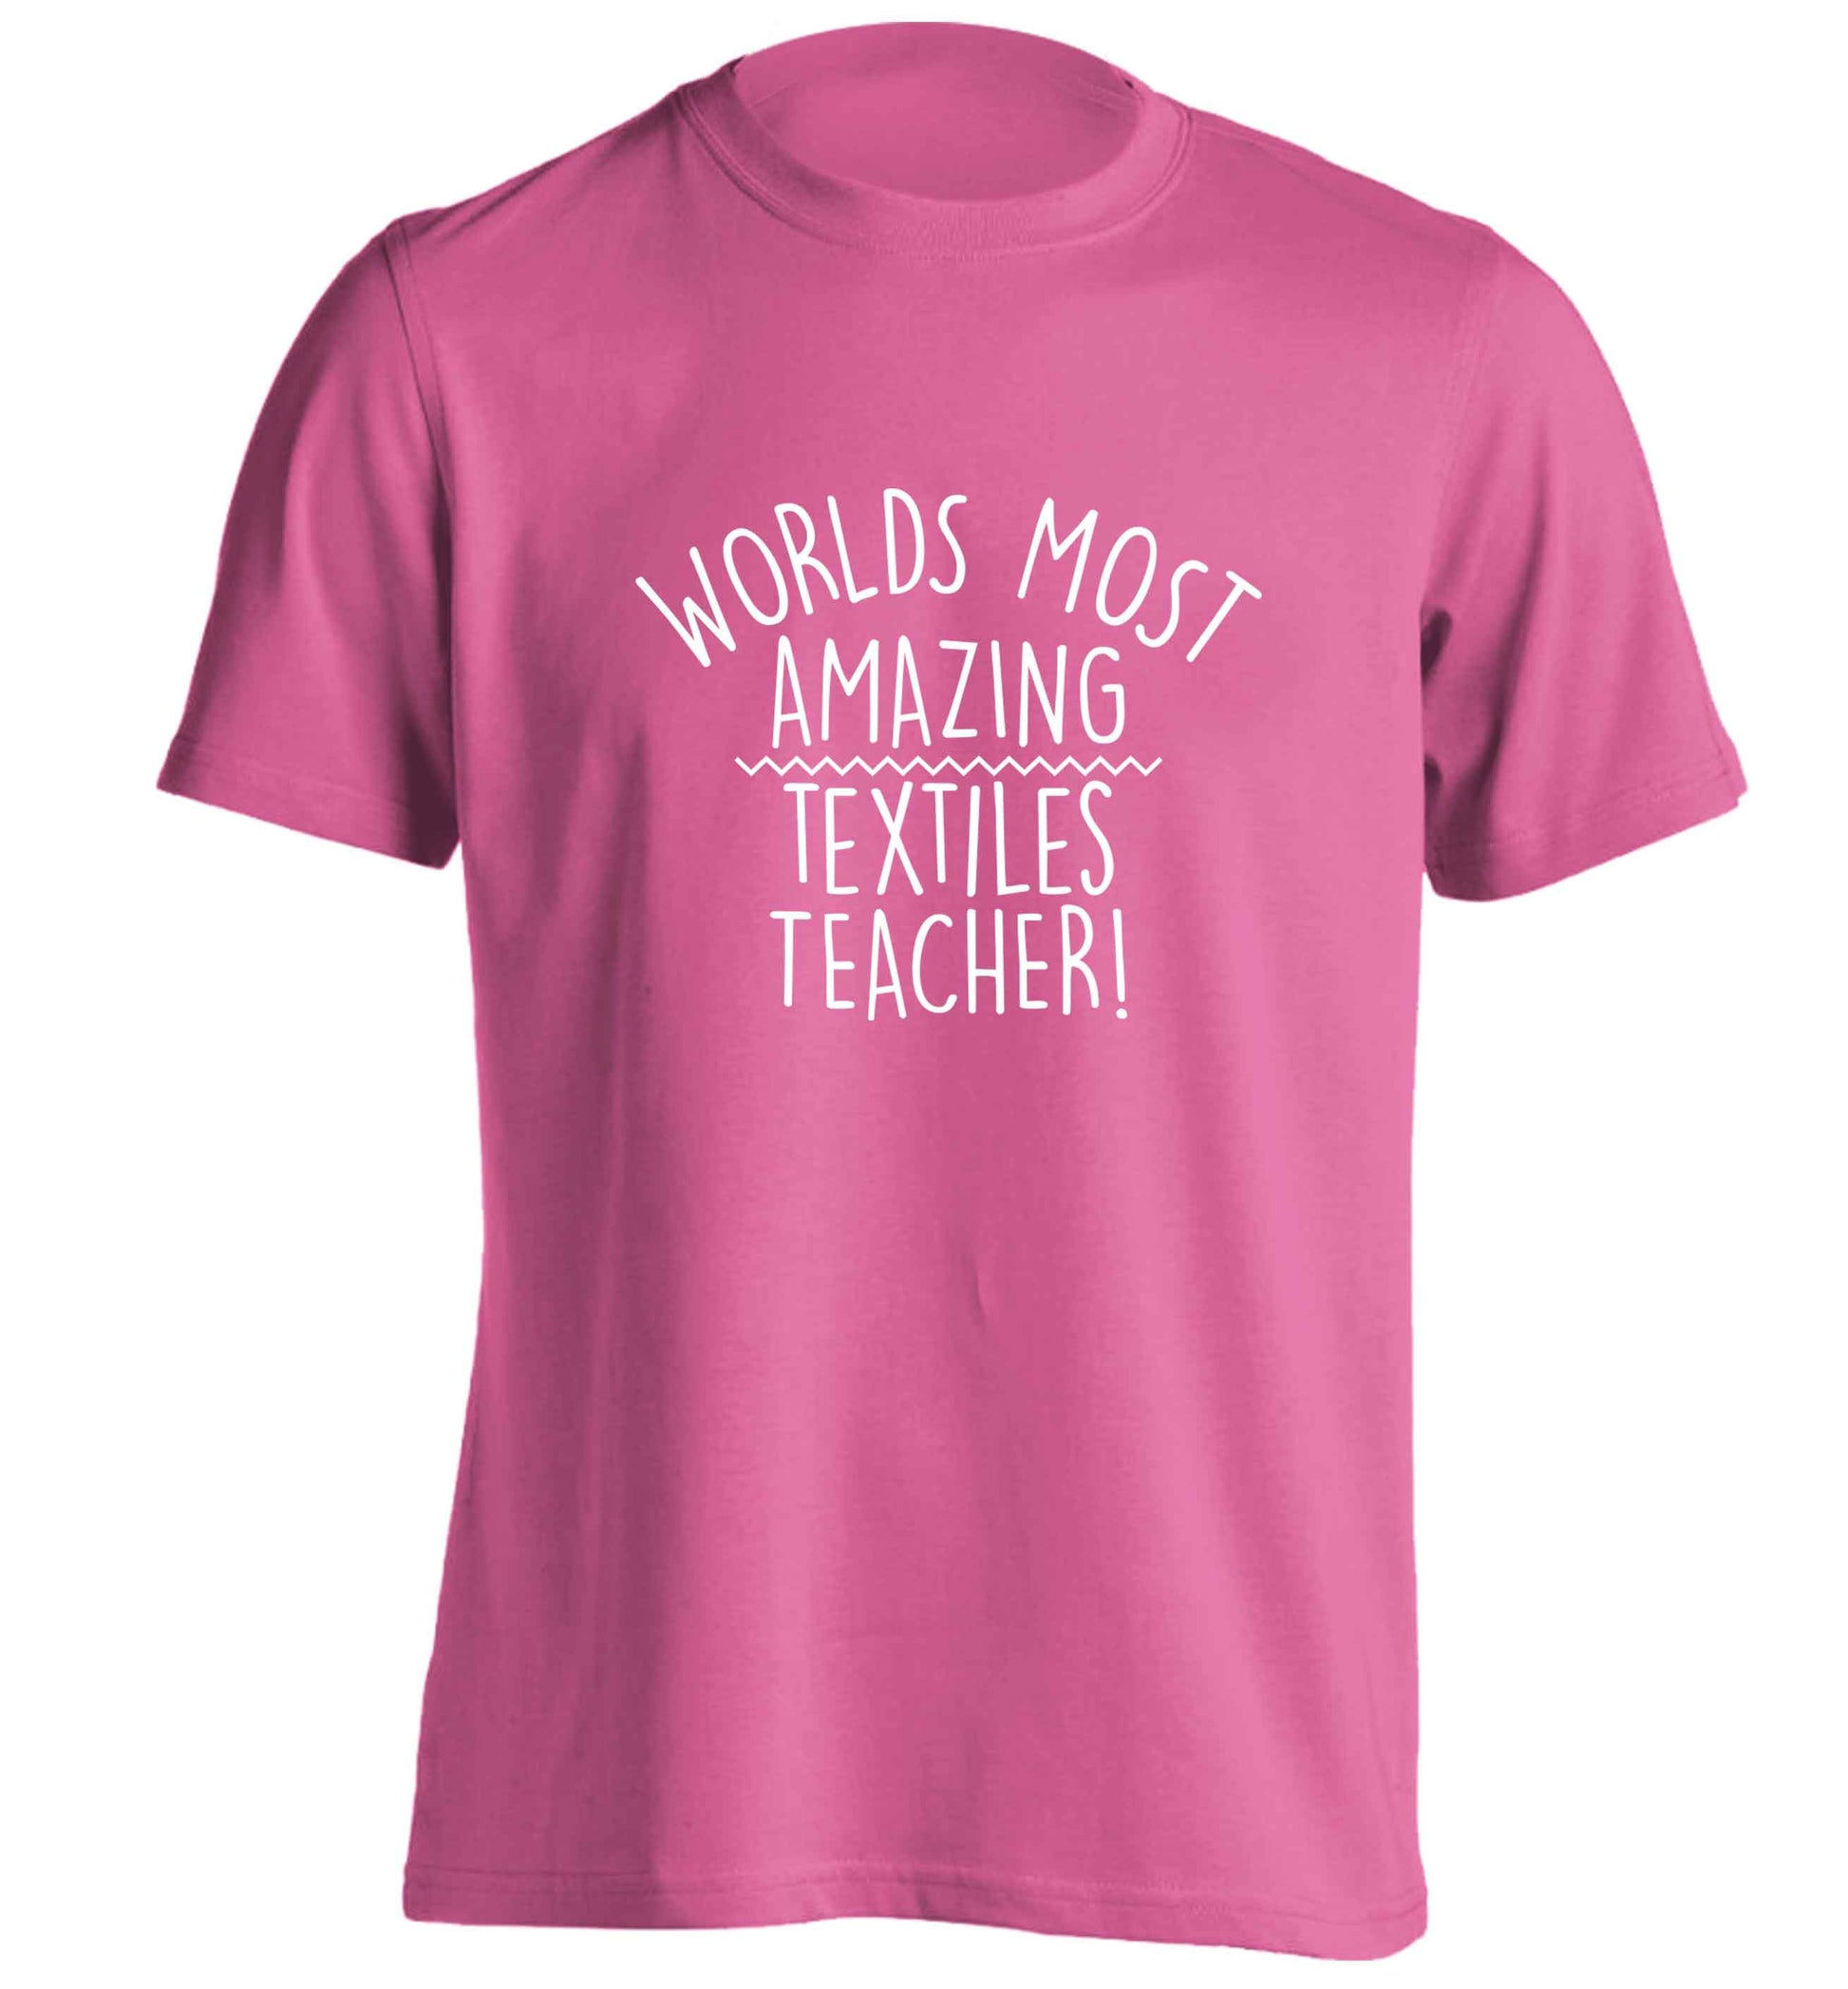 Worlds most amazing textiles teacher adults unisex pink Tshirt 2XL